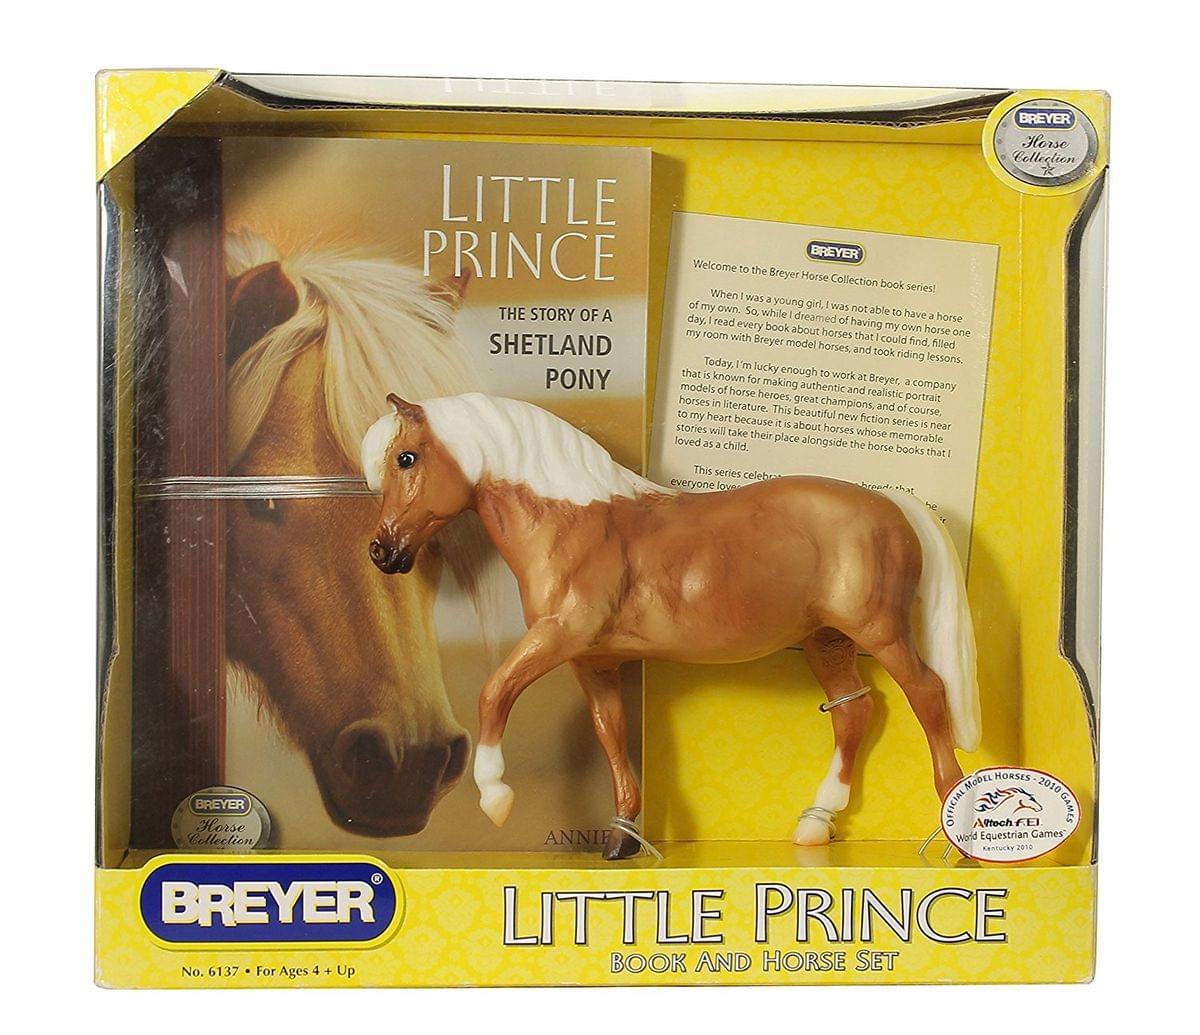 Breyer 1:12 Classics Little Prince Model Horse and Book Set